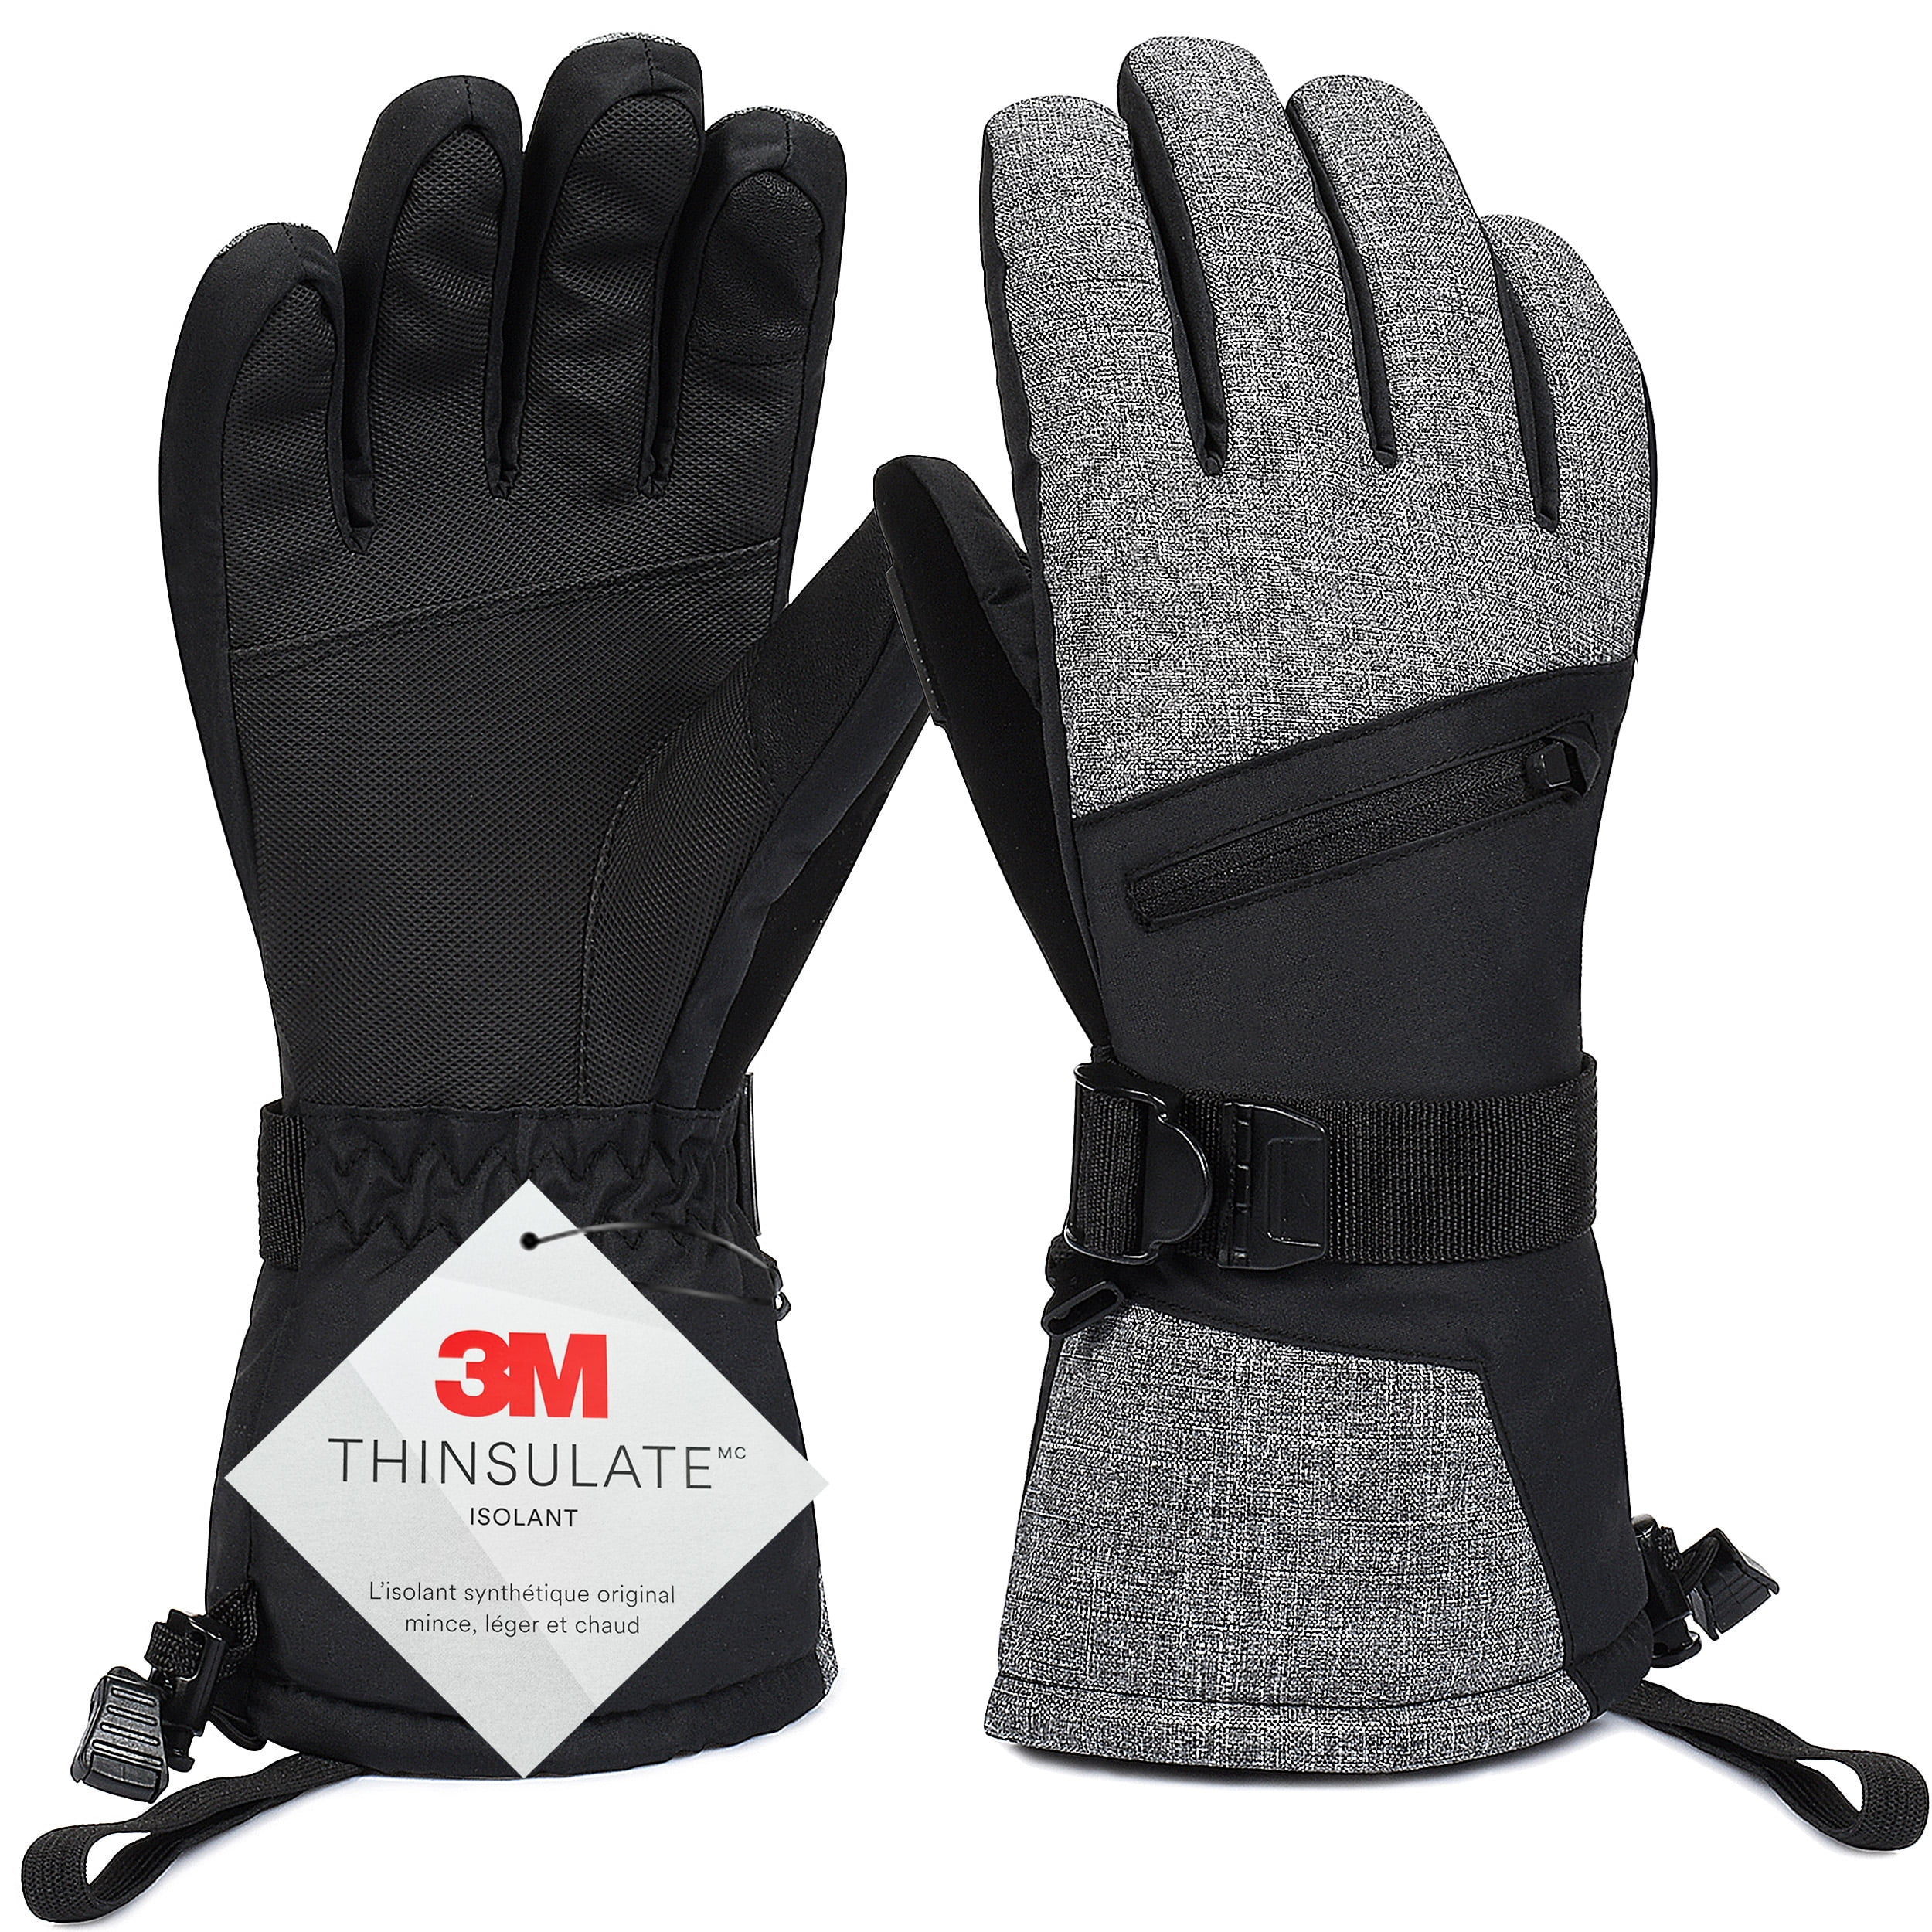 Winter Gloves Ski Gloves Snow Gloves Warm Waterproof Windproof Anti-Slip Built-in Zipper Pocket for Skiing Snowboarding Skating Shoveling Medium